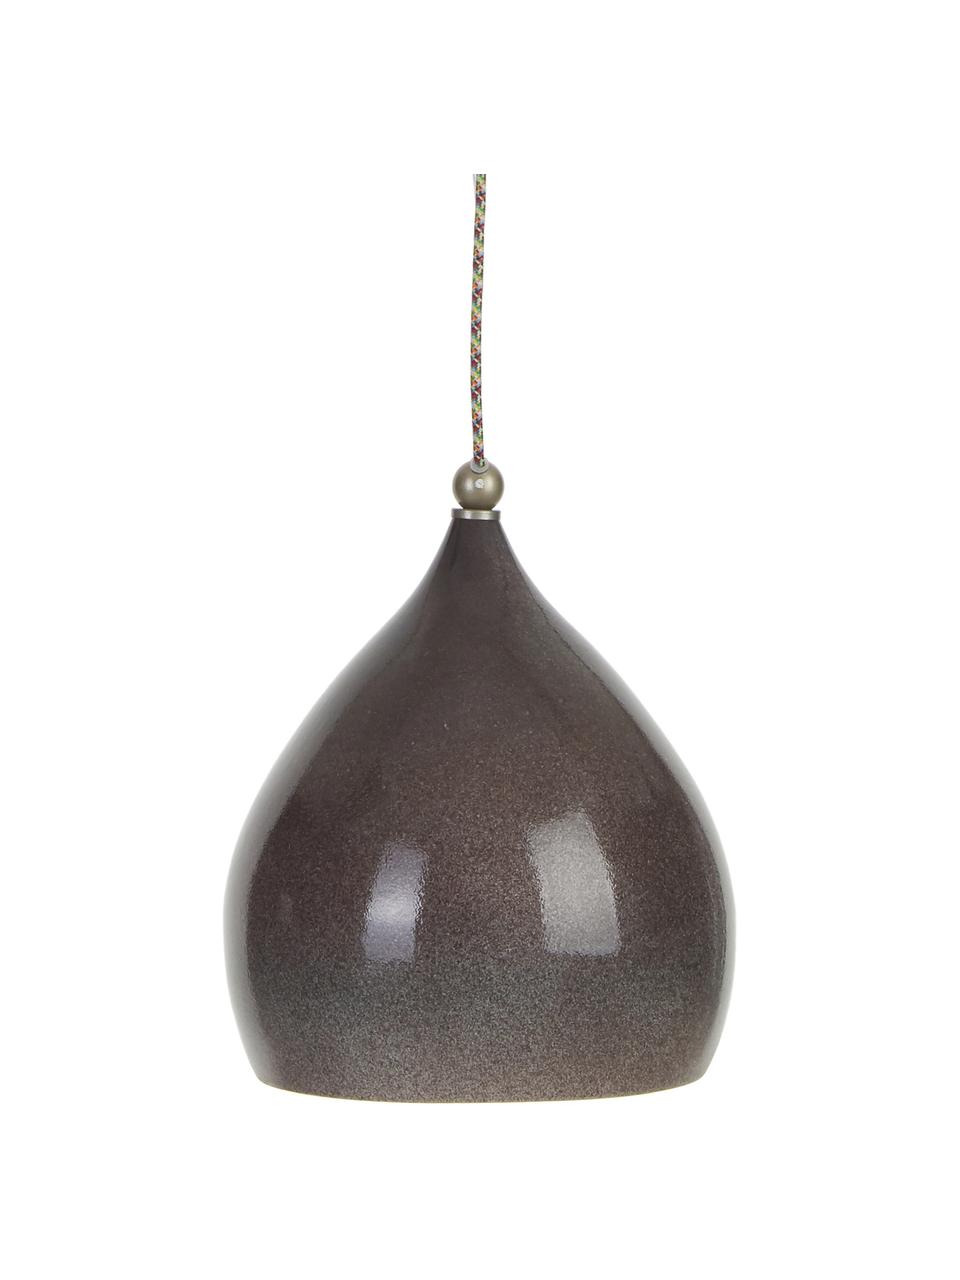 Kleine hanglamp Vague van keramiek, Lampenkap: keramiek, Baldakijn: keramiek, Grijs, 26 x 29 cm